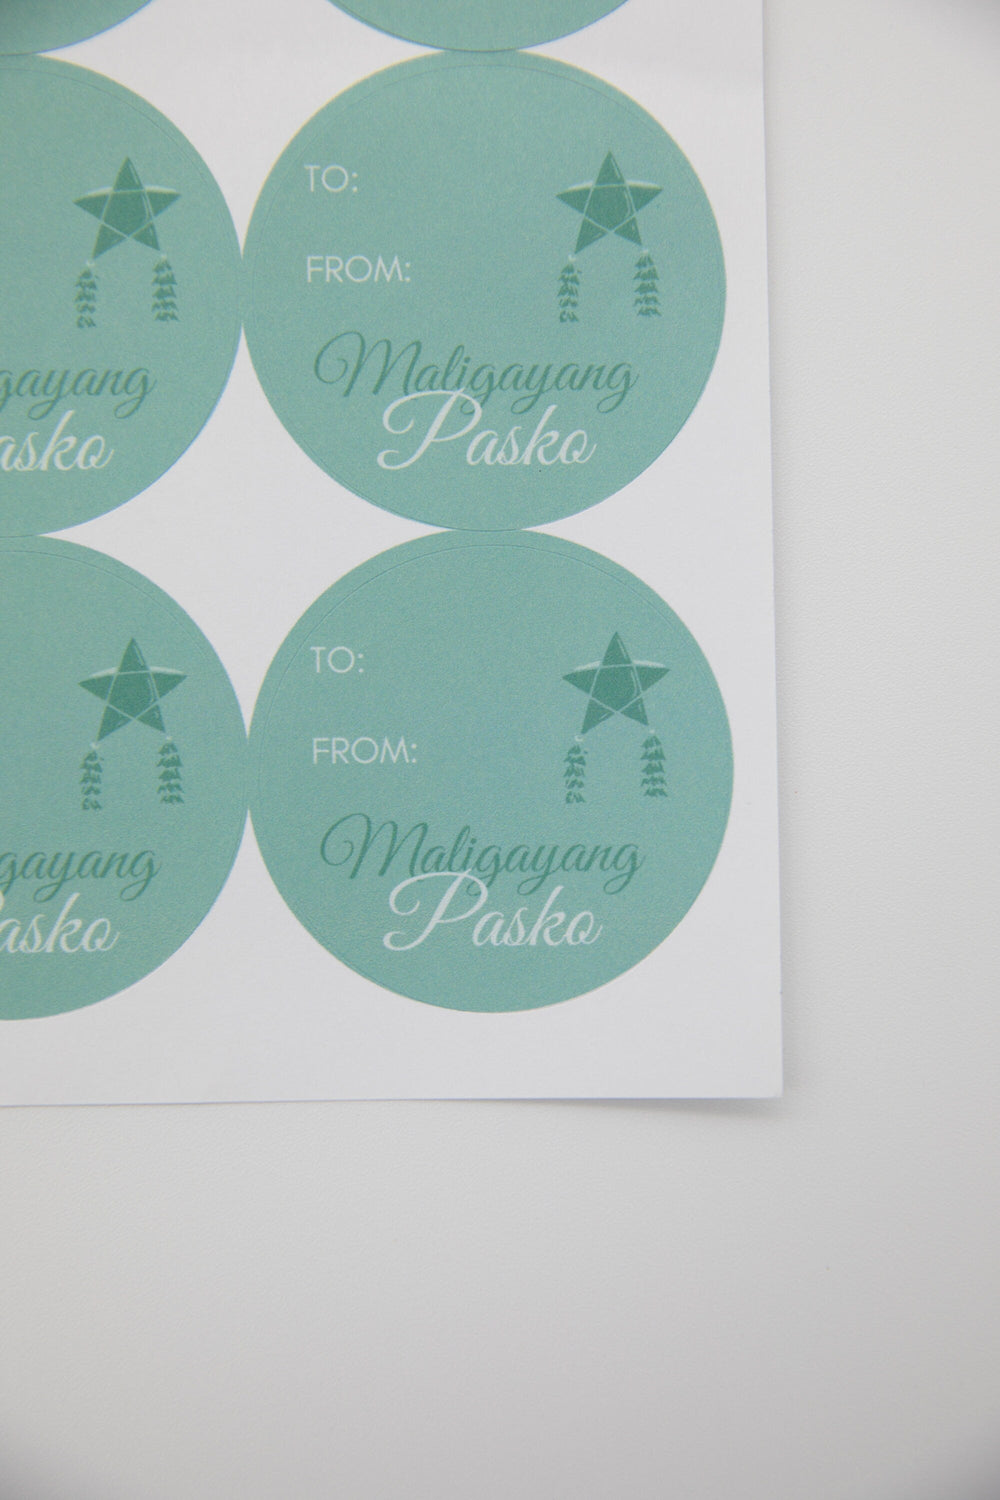 Mie Makes Filipino Christmas Gift Label Sticker Sheet of 20, Maligayang Pasko